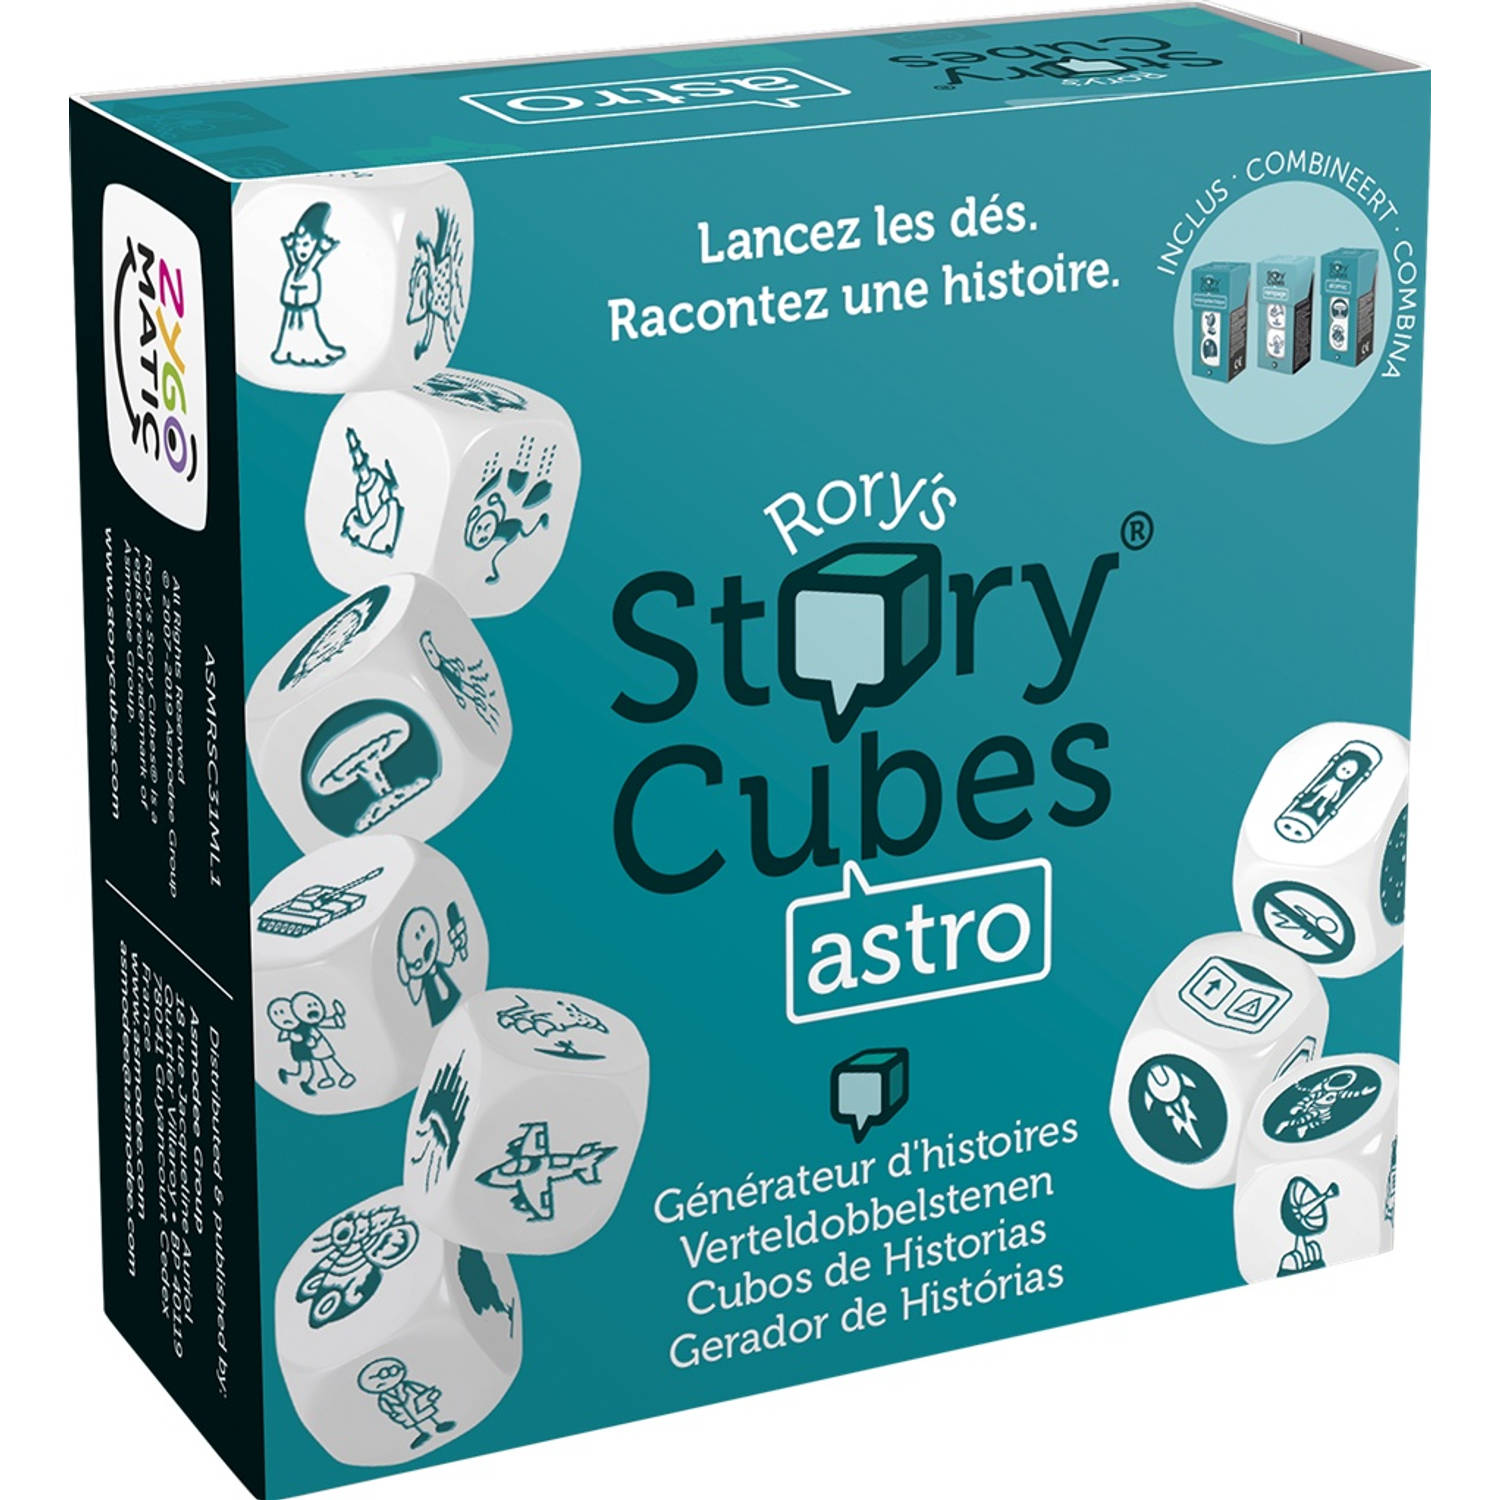 Zygomatic dobbelspel Rory's Story Cubes - Astro